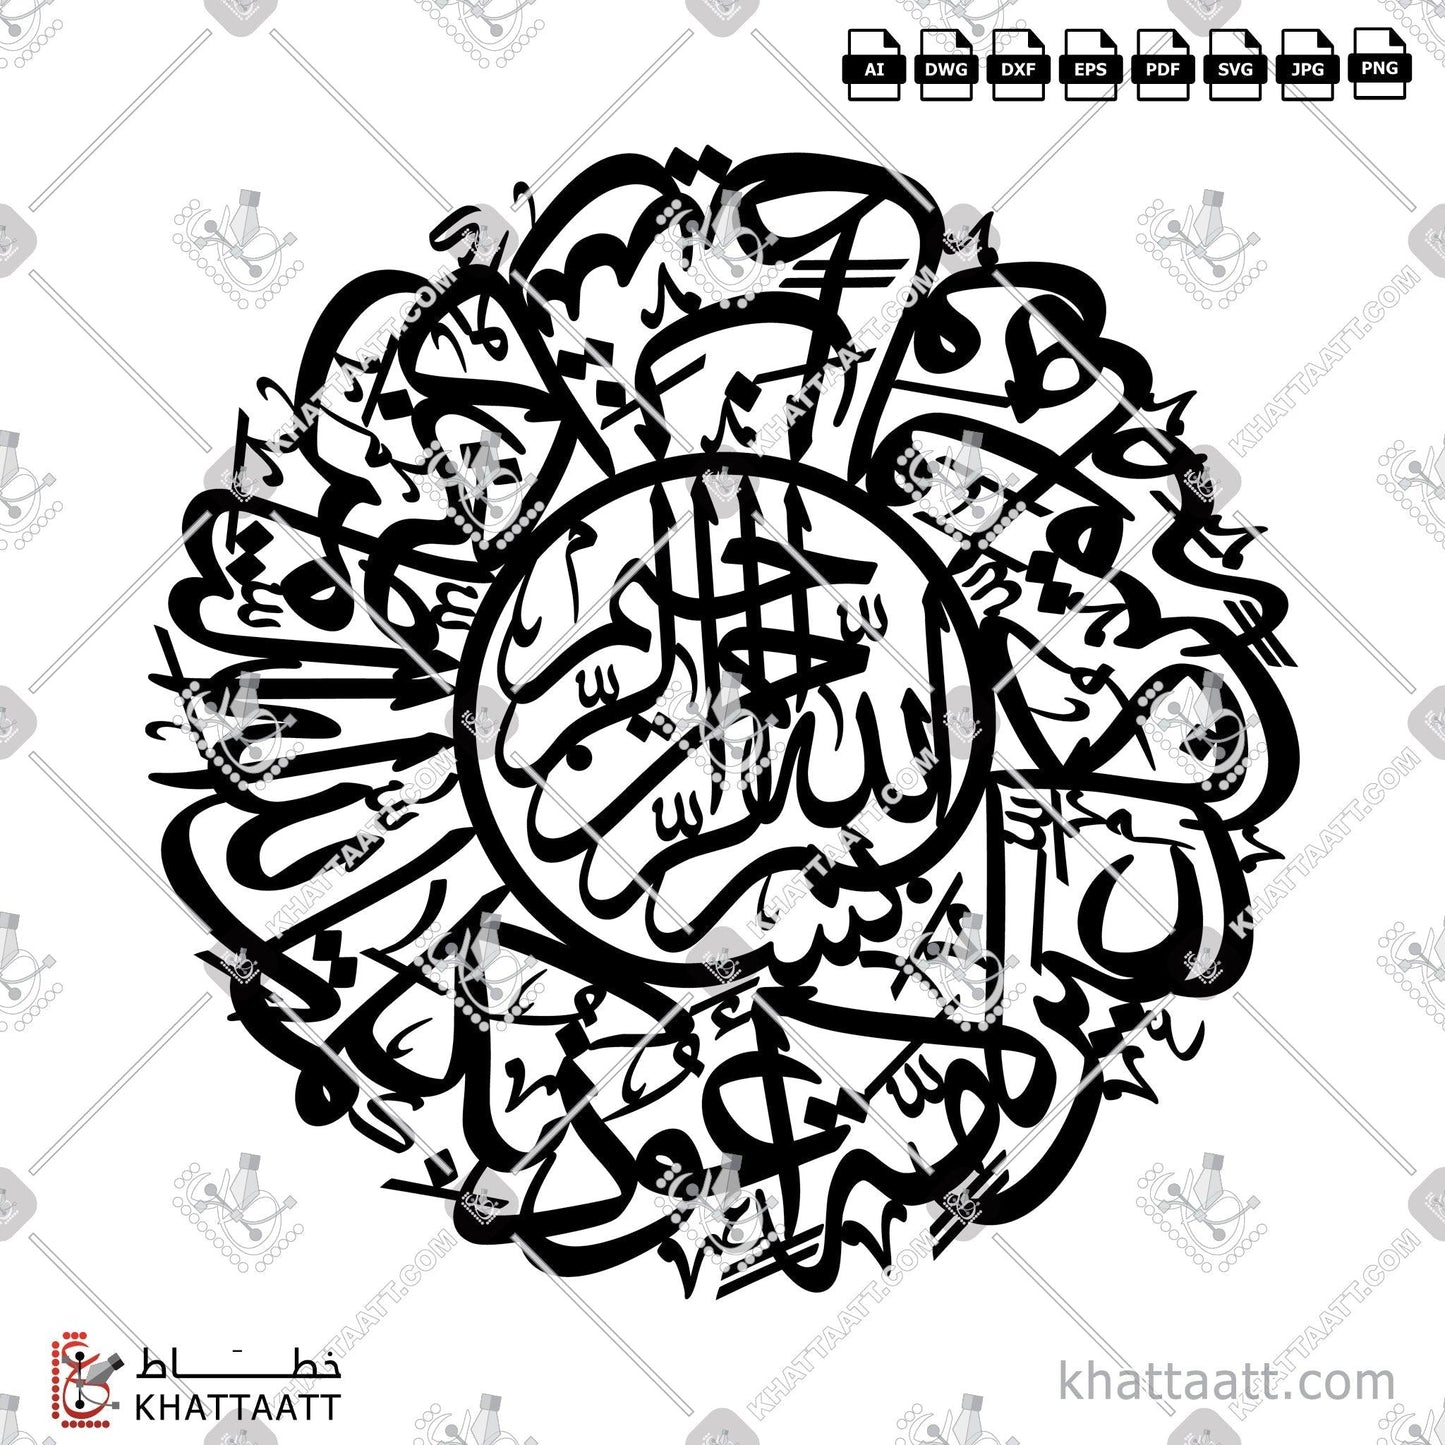 Digital Arabic calligraphy vector of أعوذ بكلمات الله التامة من كل شيطان وهامة ومن كل عين لامة in Thuluth - خط الثلث